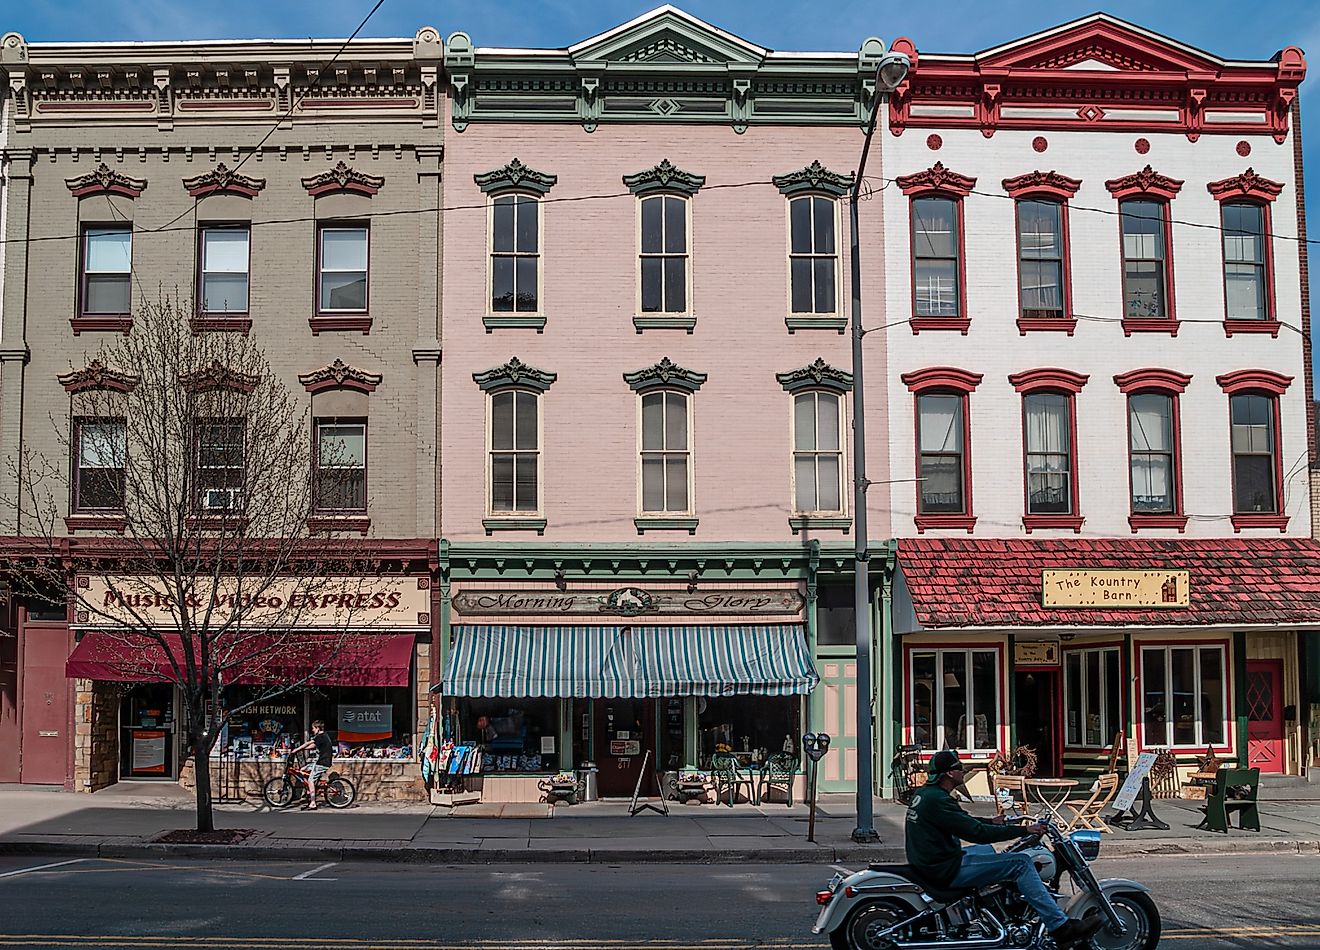 Main Strett with classic storefronts in Honesdale, Pennsylvania. Image credit Andrew F. Kazmierski via Shutterstock